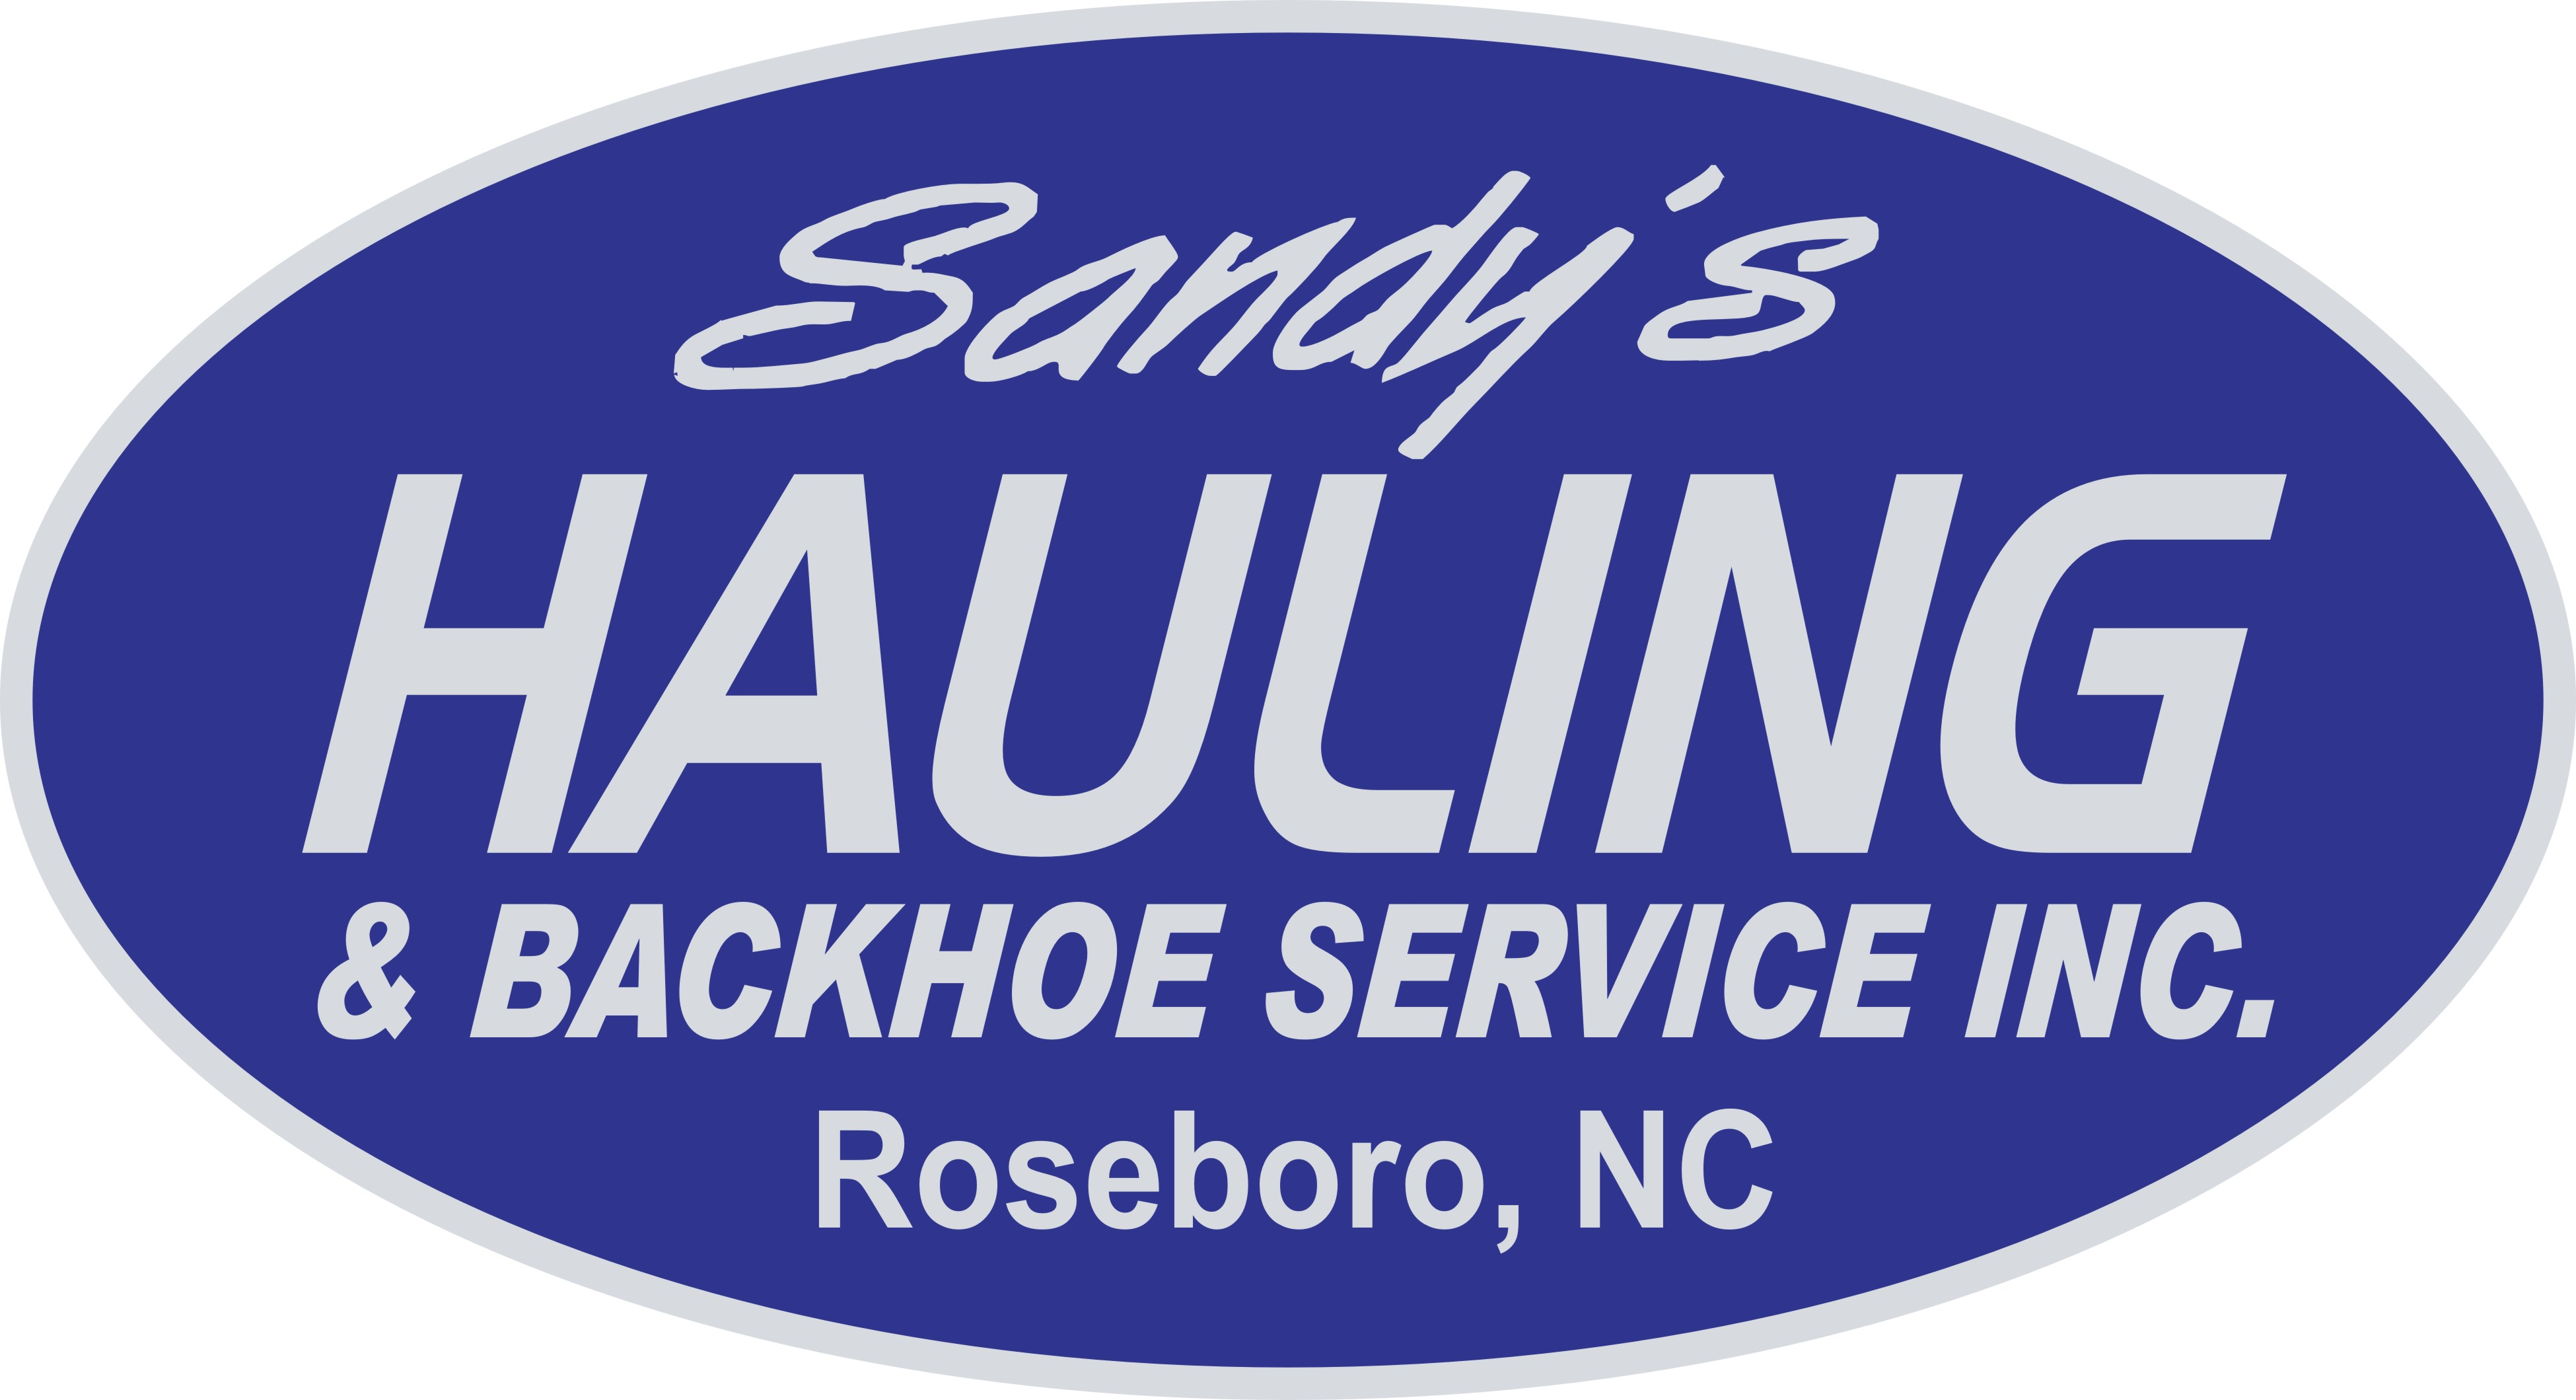 Sandy’s Hauling & Backhoe Service